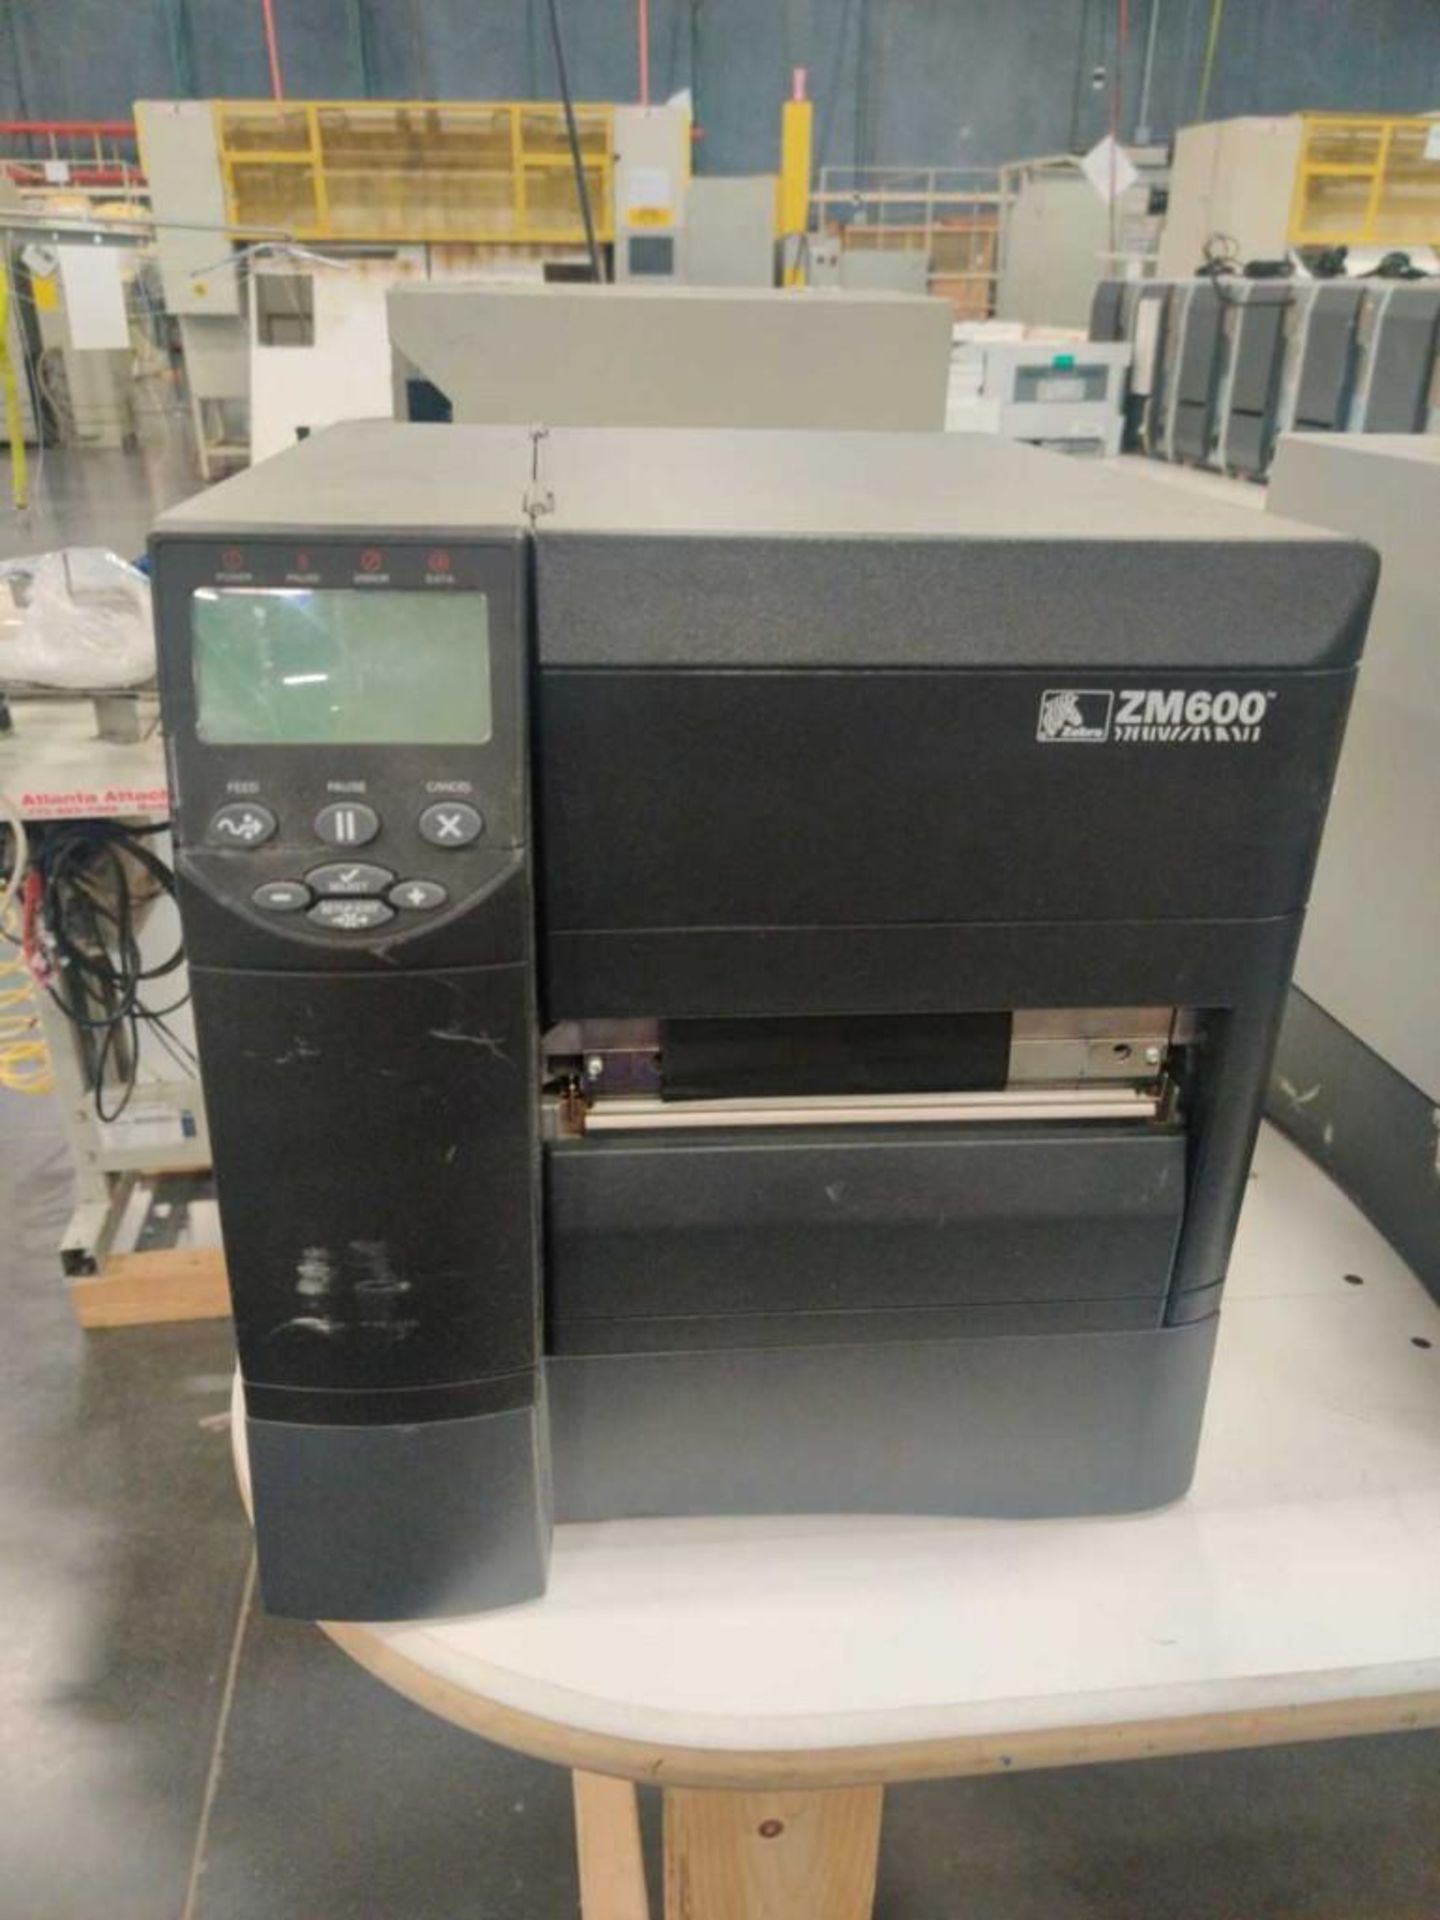 Zebra Label Printer ZM600 15" x 13" x 13"